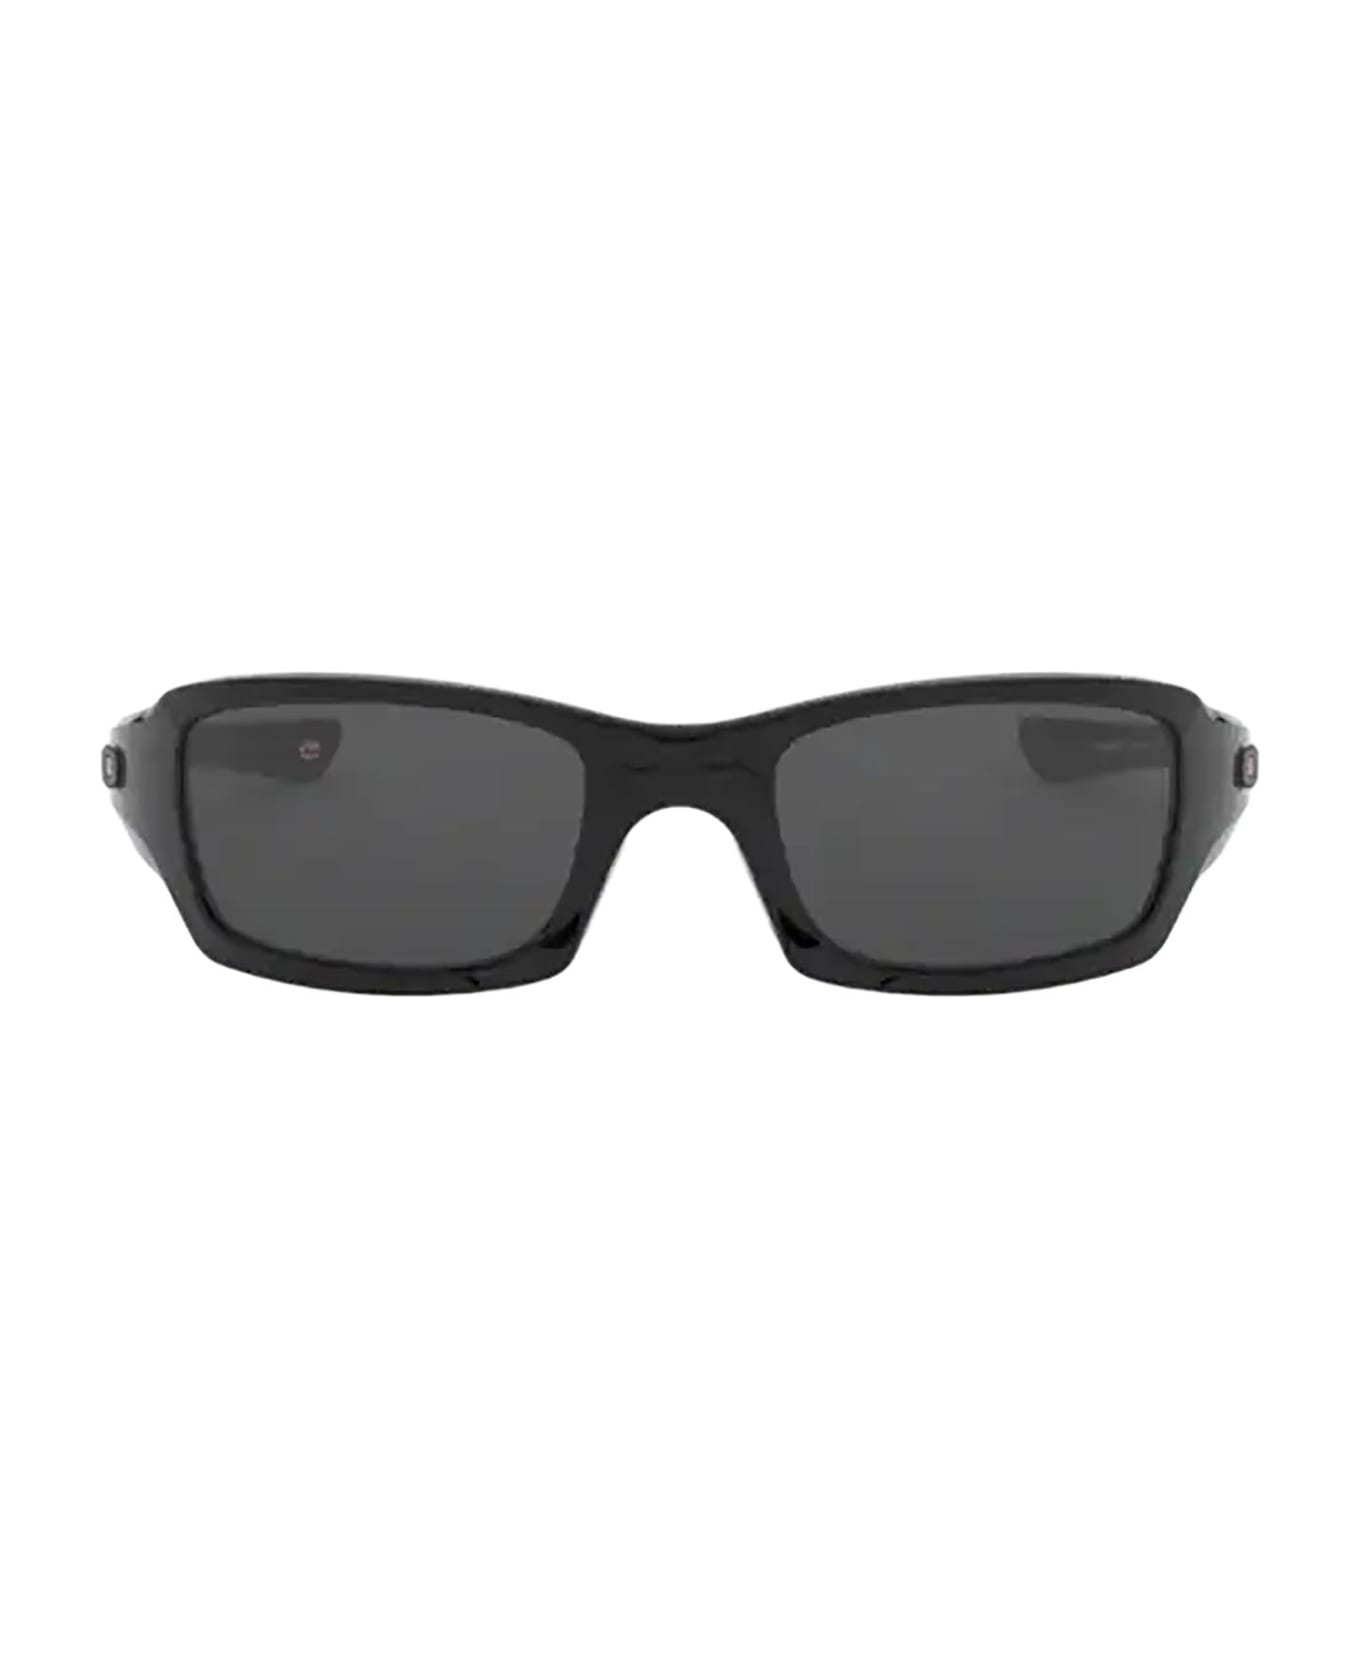 Oakley Oo9238 Polished Black Sunglasses - Polished Black